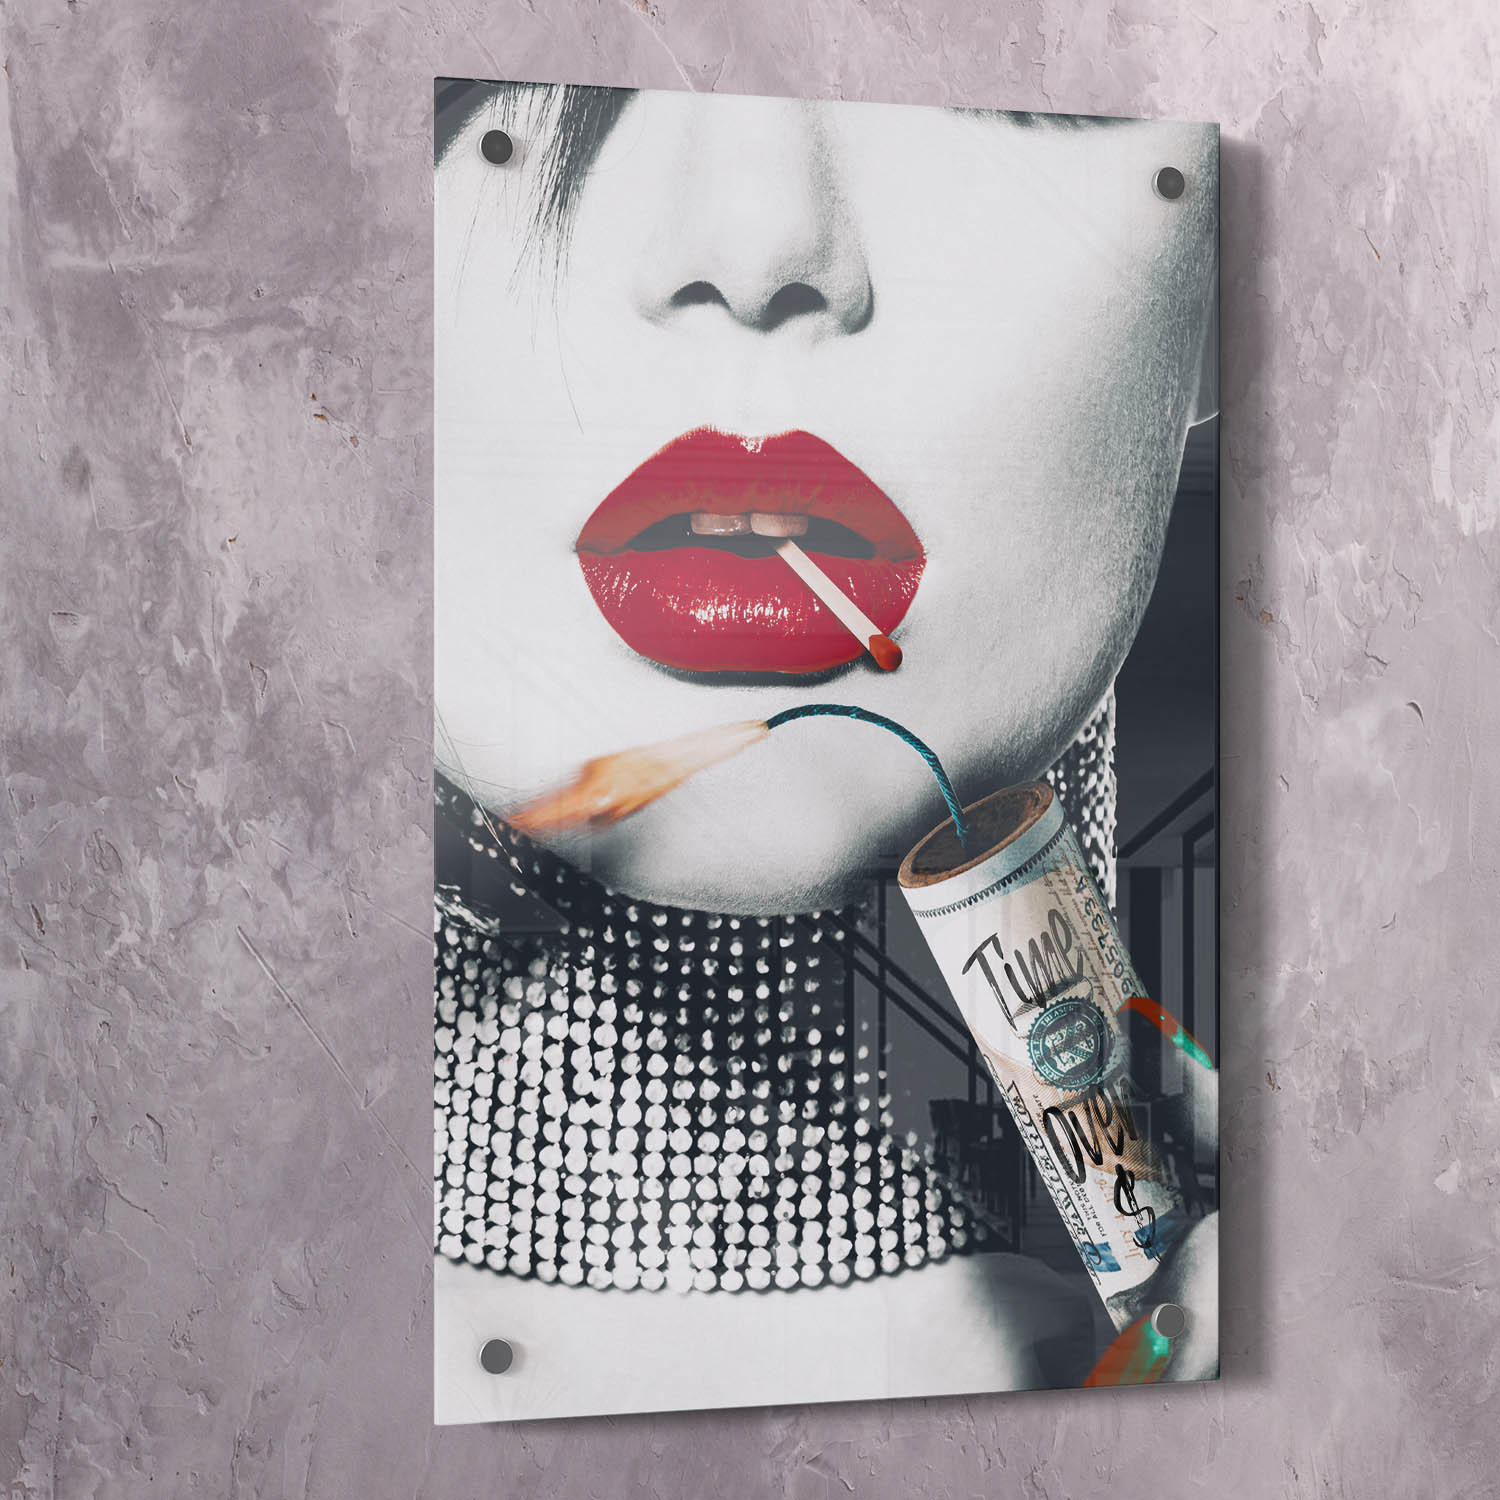 Time Over Money Dynamite Beauty Art Wall Art | Inspirational Wall Art Motivational Wall Art Quotes Office Art | ImpaktMaker Exclusive Canvas Art Portrait